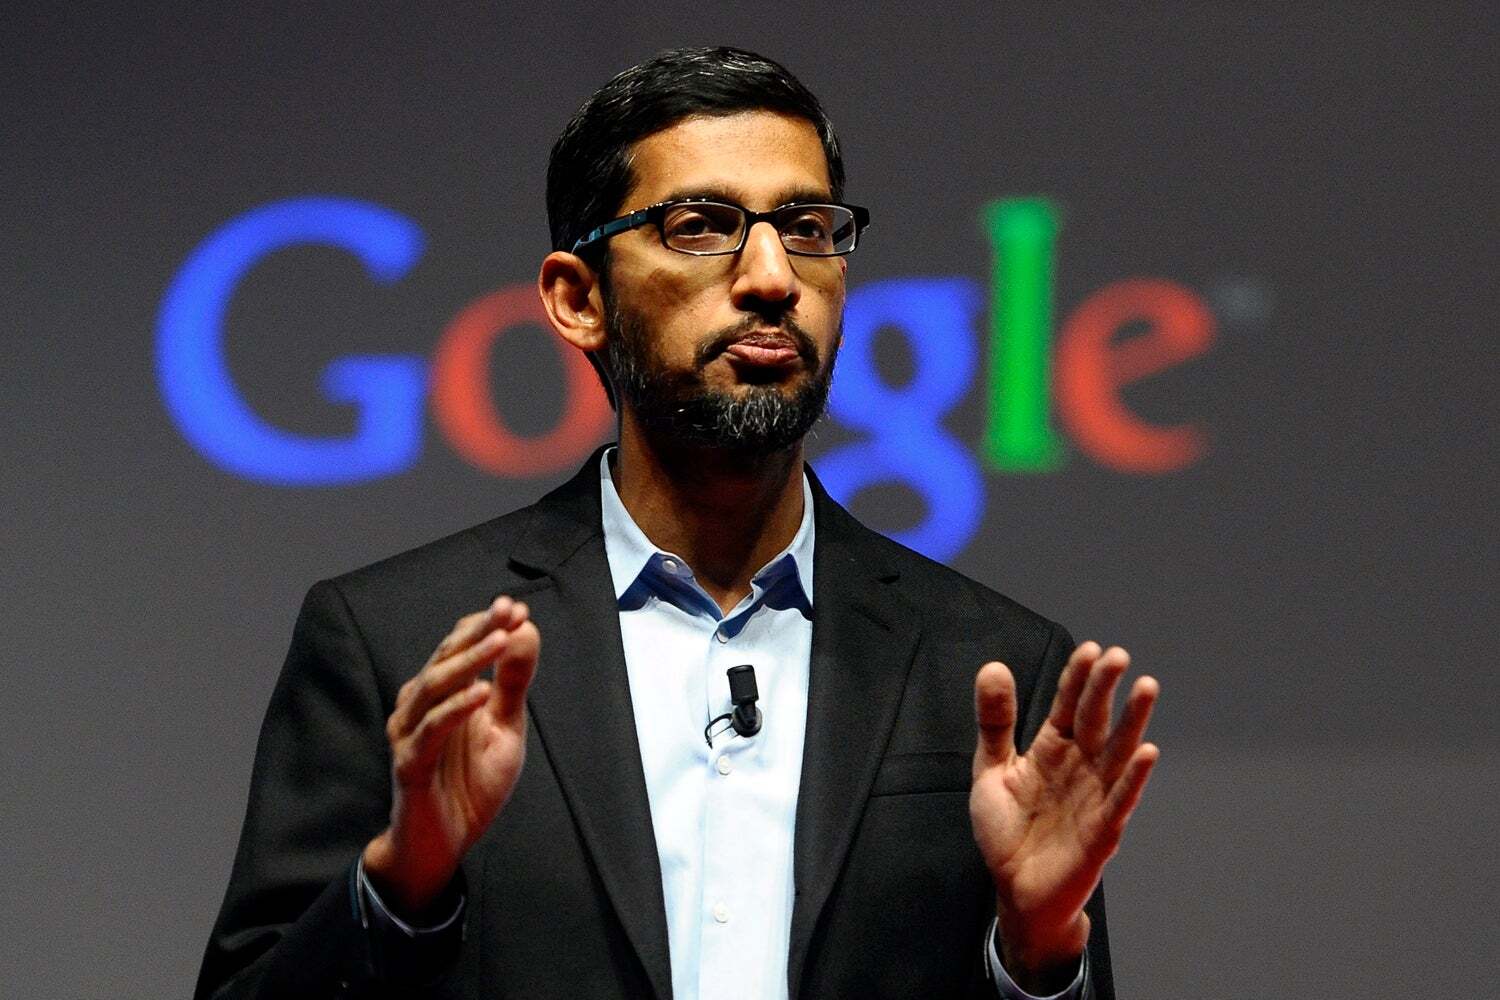 Sundar Pichai: Leading Google as a future-oriented CEO